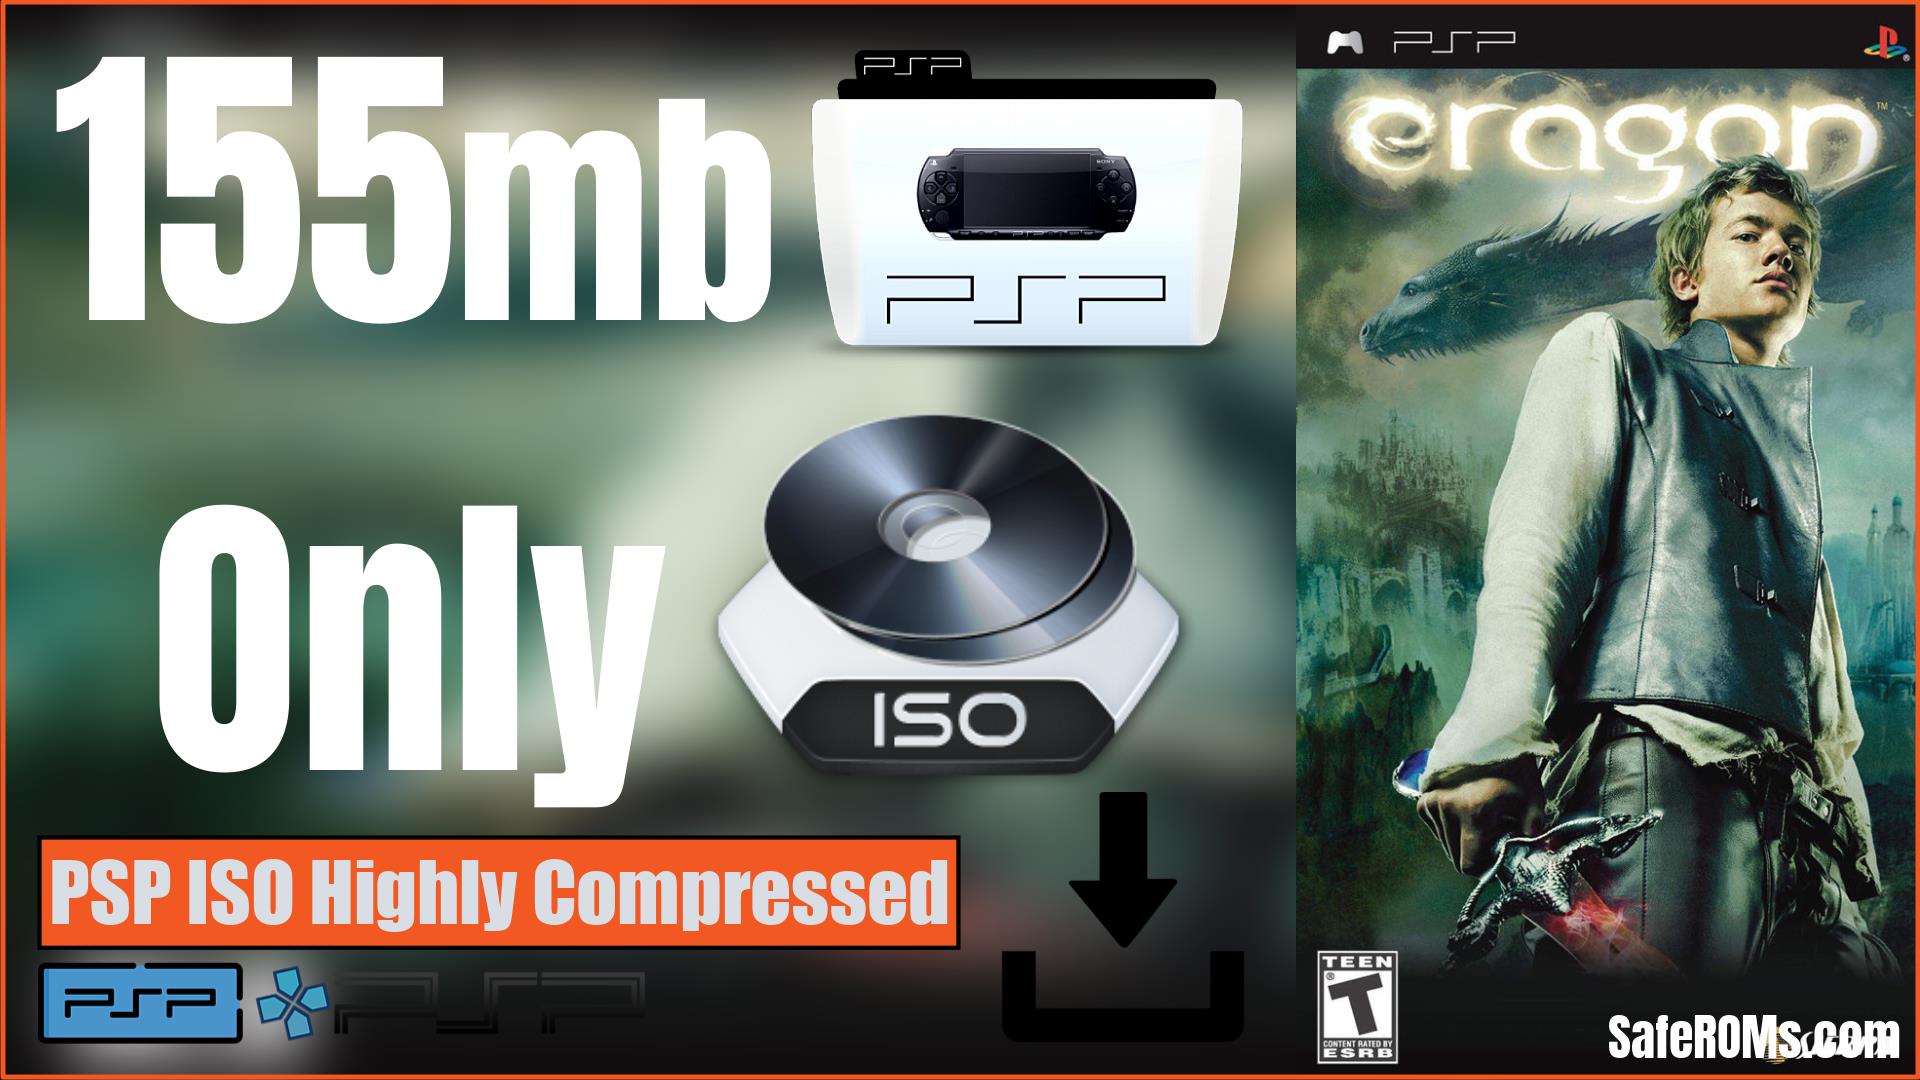 Eragon PSP ISO Highly Compressed Download (155mb)